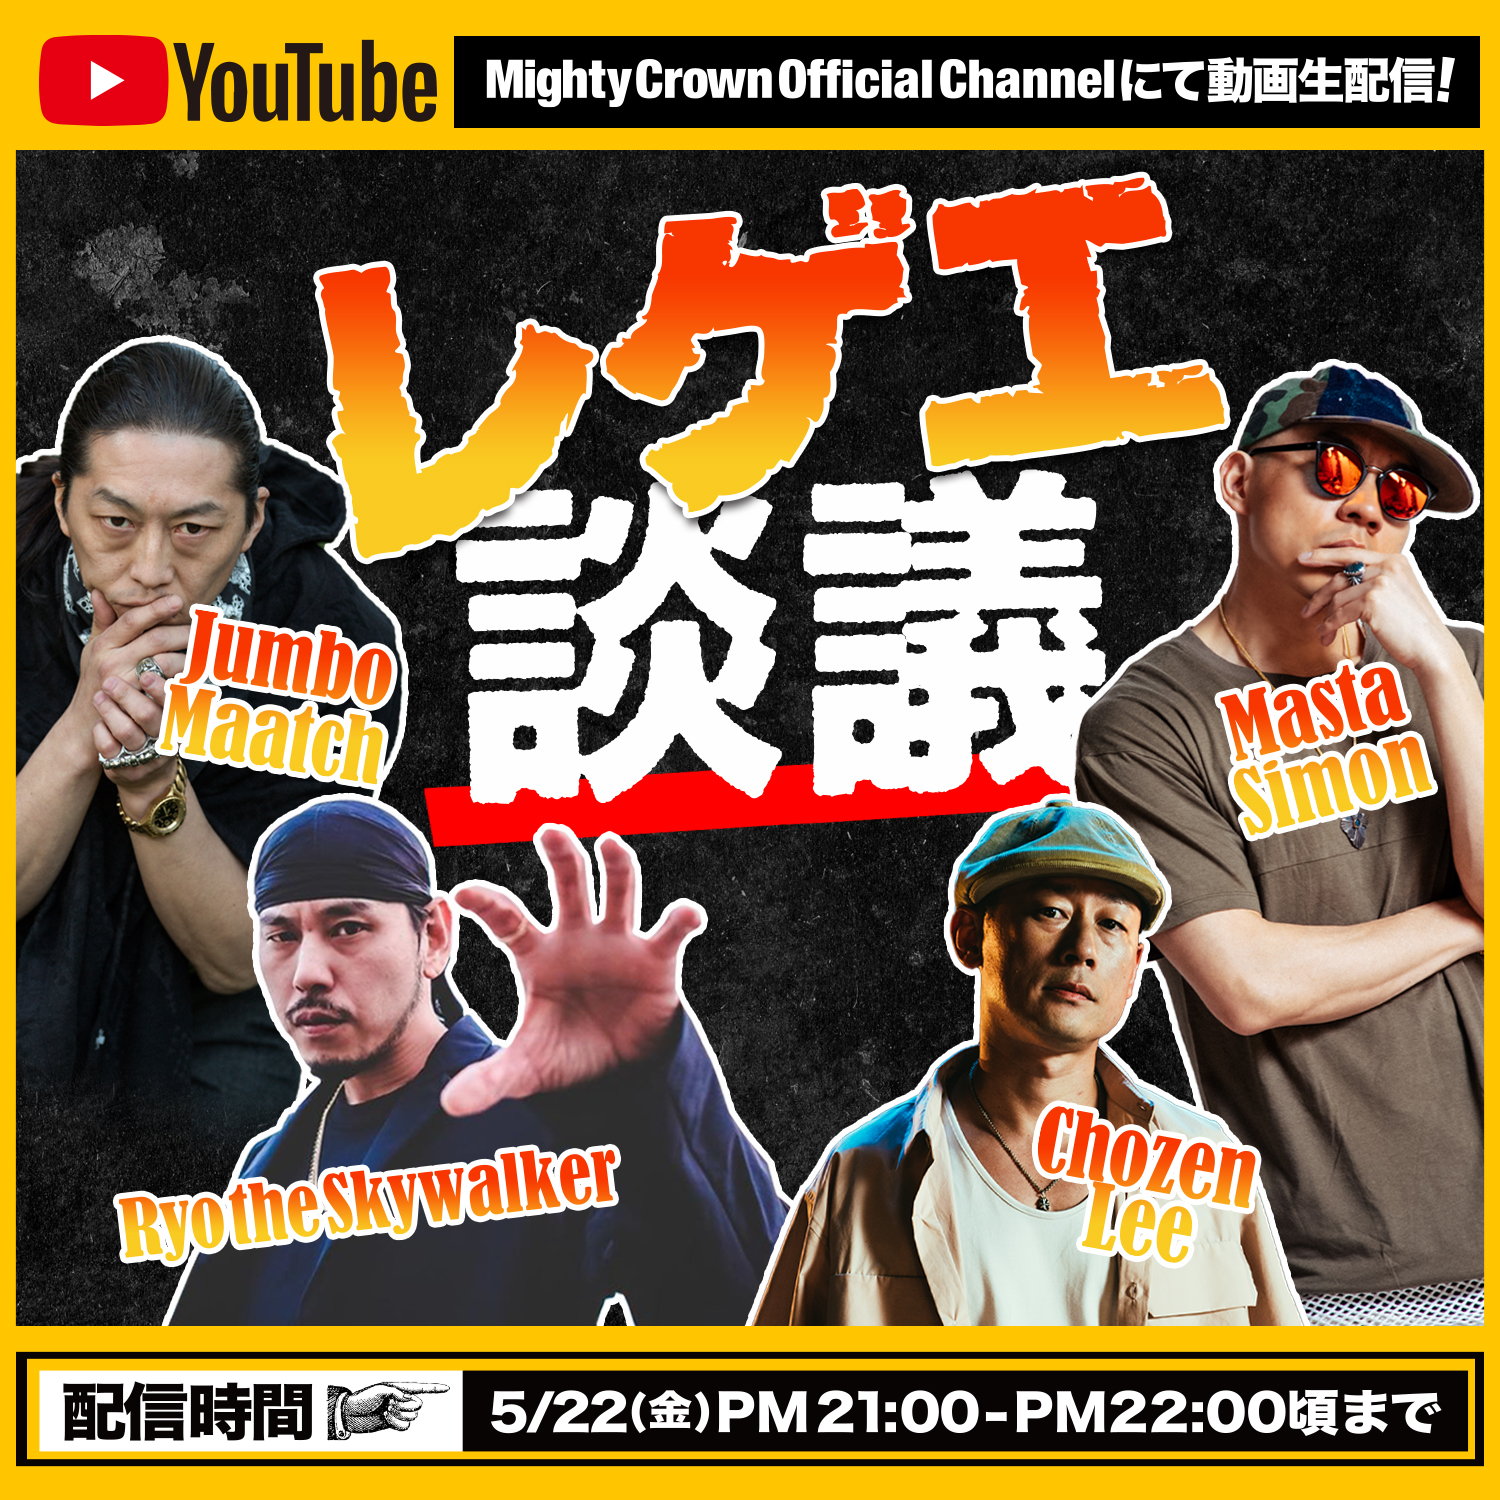 JUMBO MAATCH出演 5/22(金)放送「レゲエ談議 at MIGHTY CROWN YouTube」